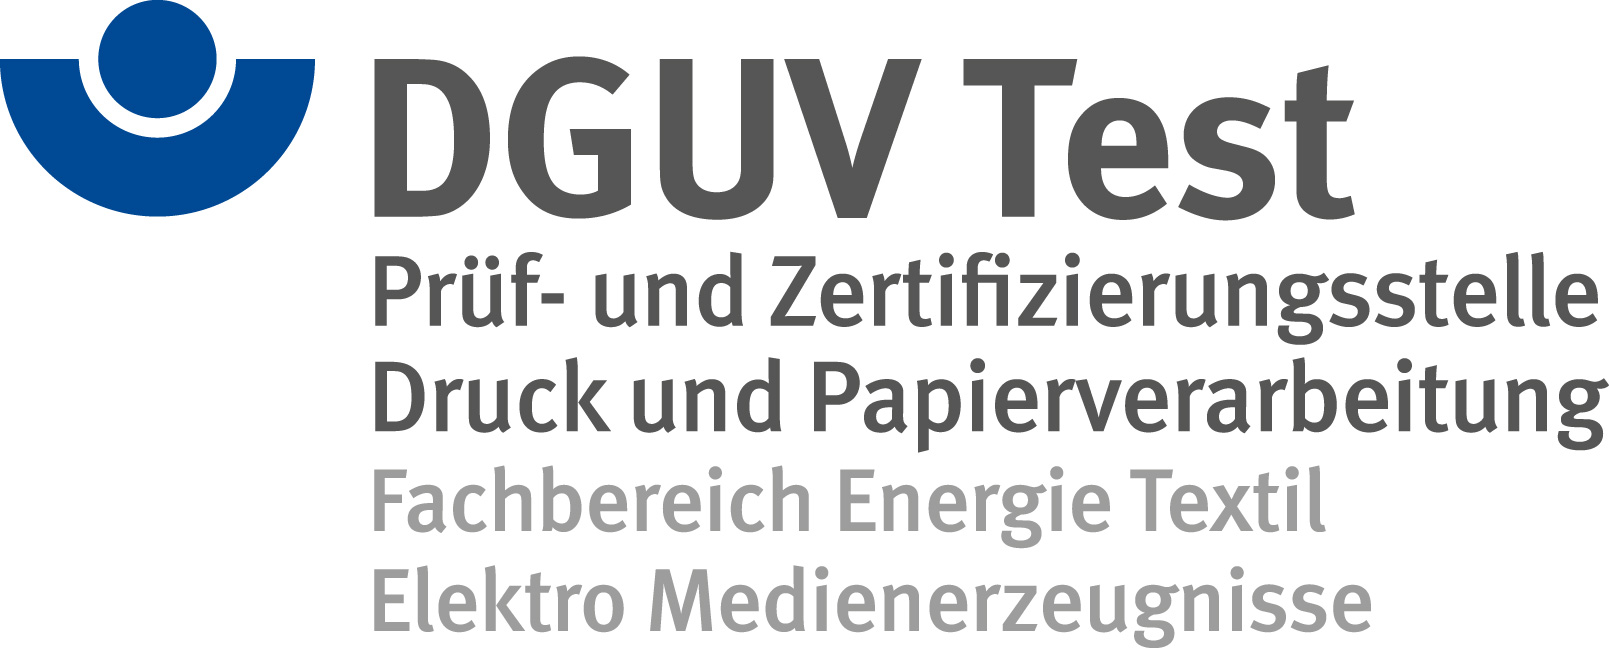 Logo-DGUV-Test_DP.jpg